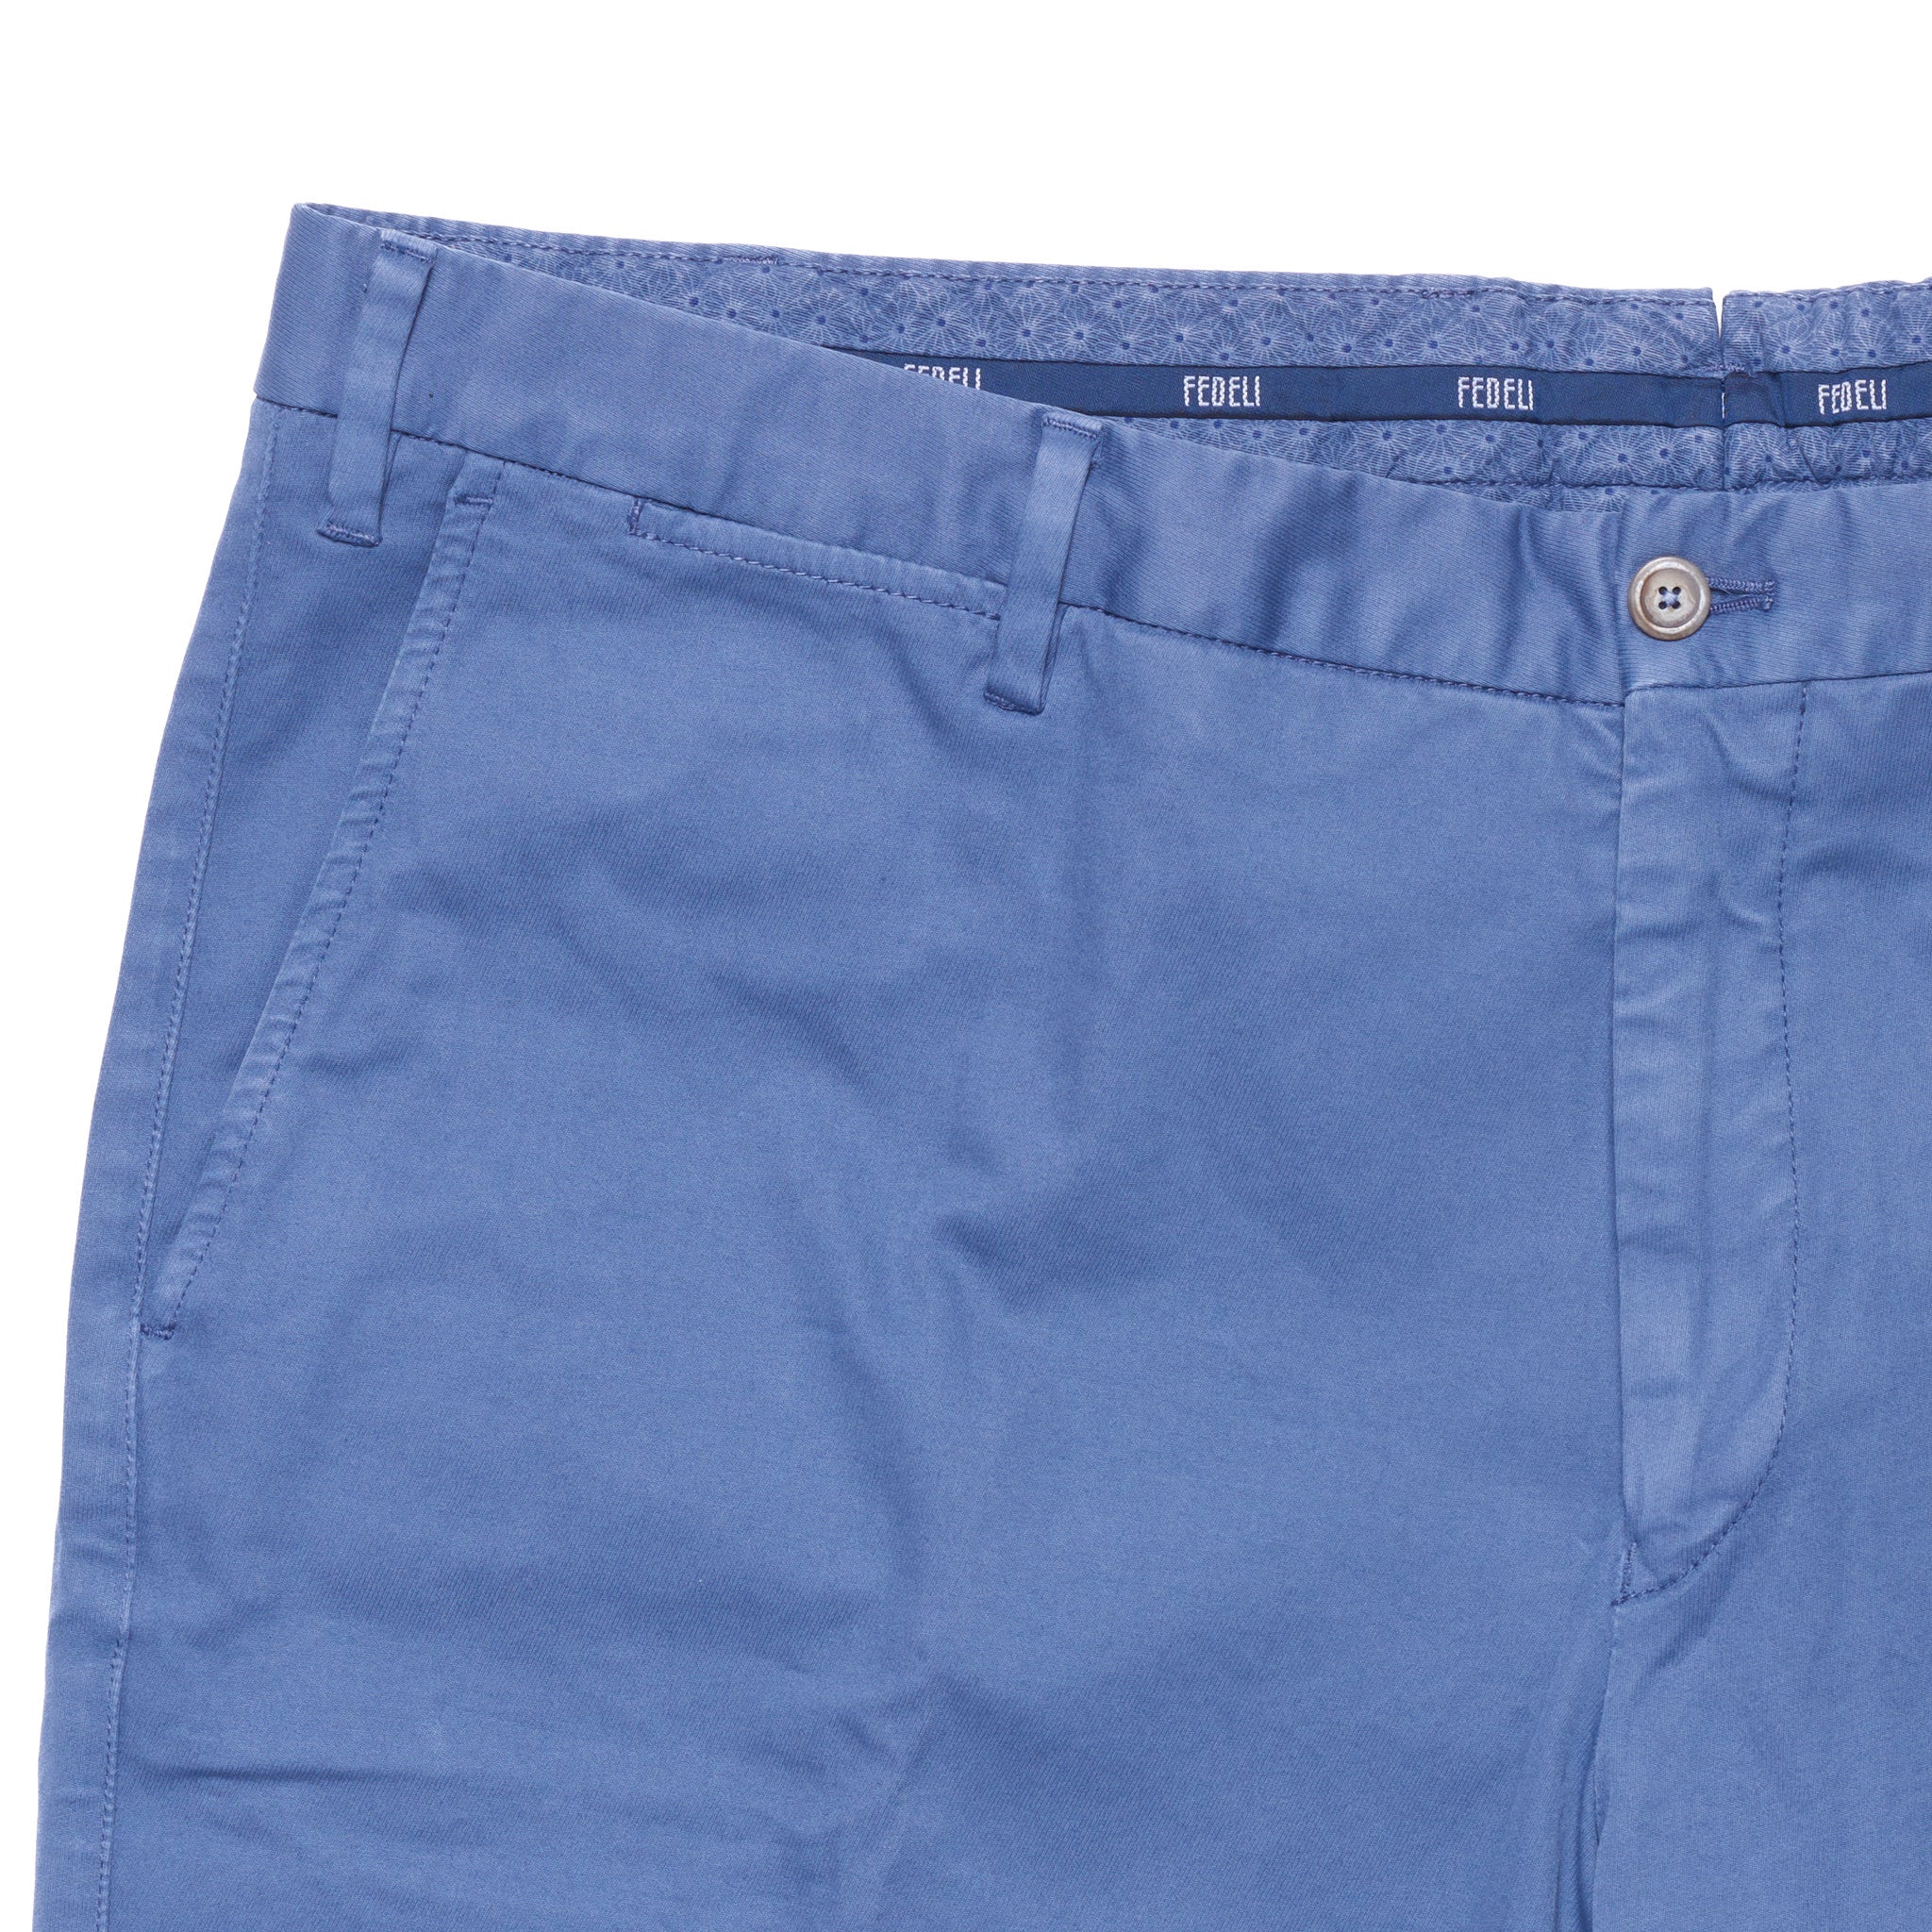 FEDELI "Moon" Blue Cotton Twill Casual Bermuda Shorts EU 56 NEW US 40 FEDELI